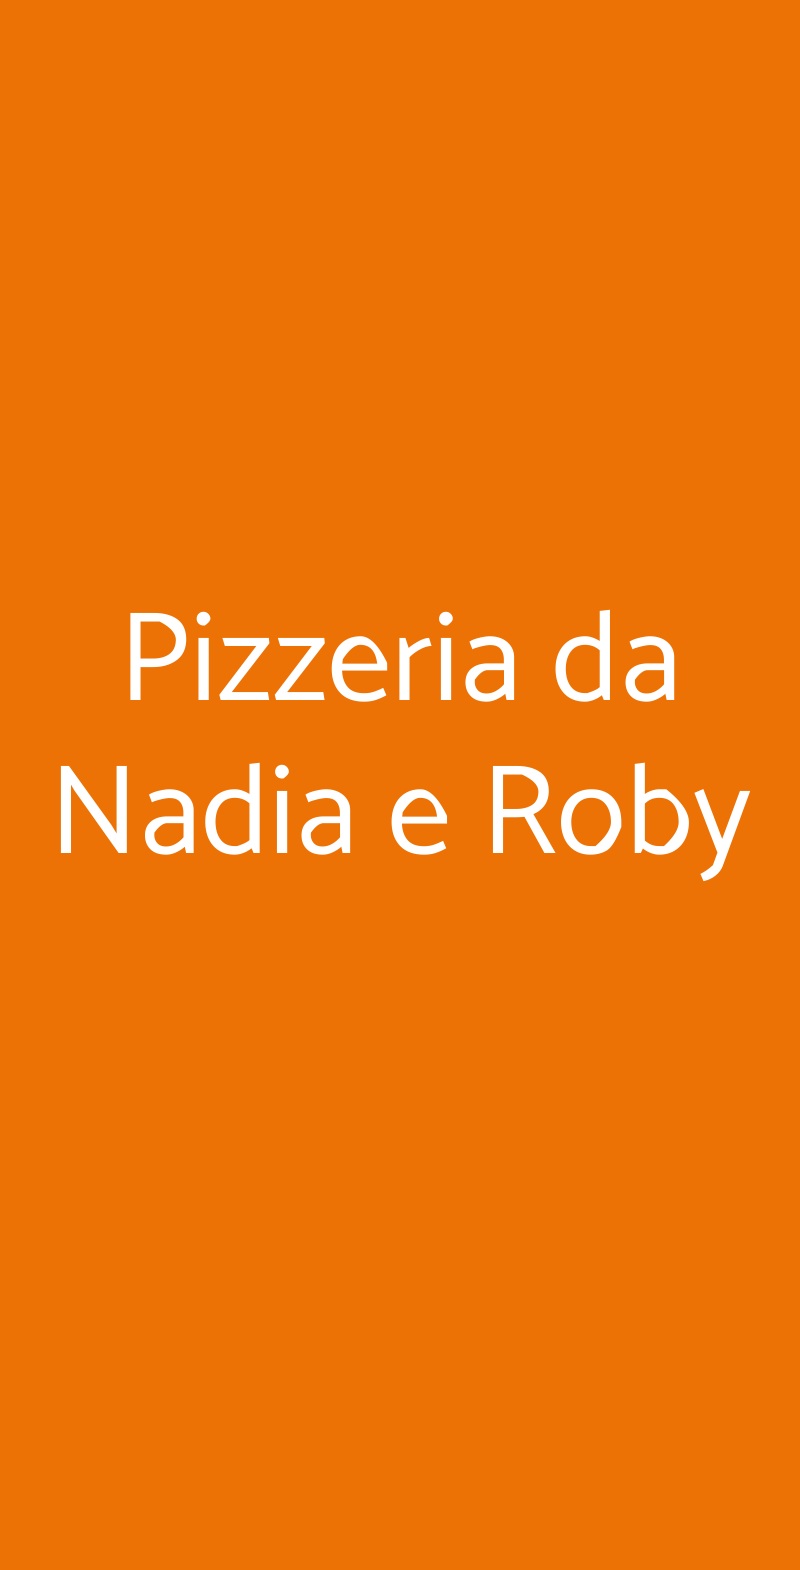 Pizzeria da Nadia e Roby Genova menù 1 pagina